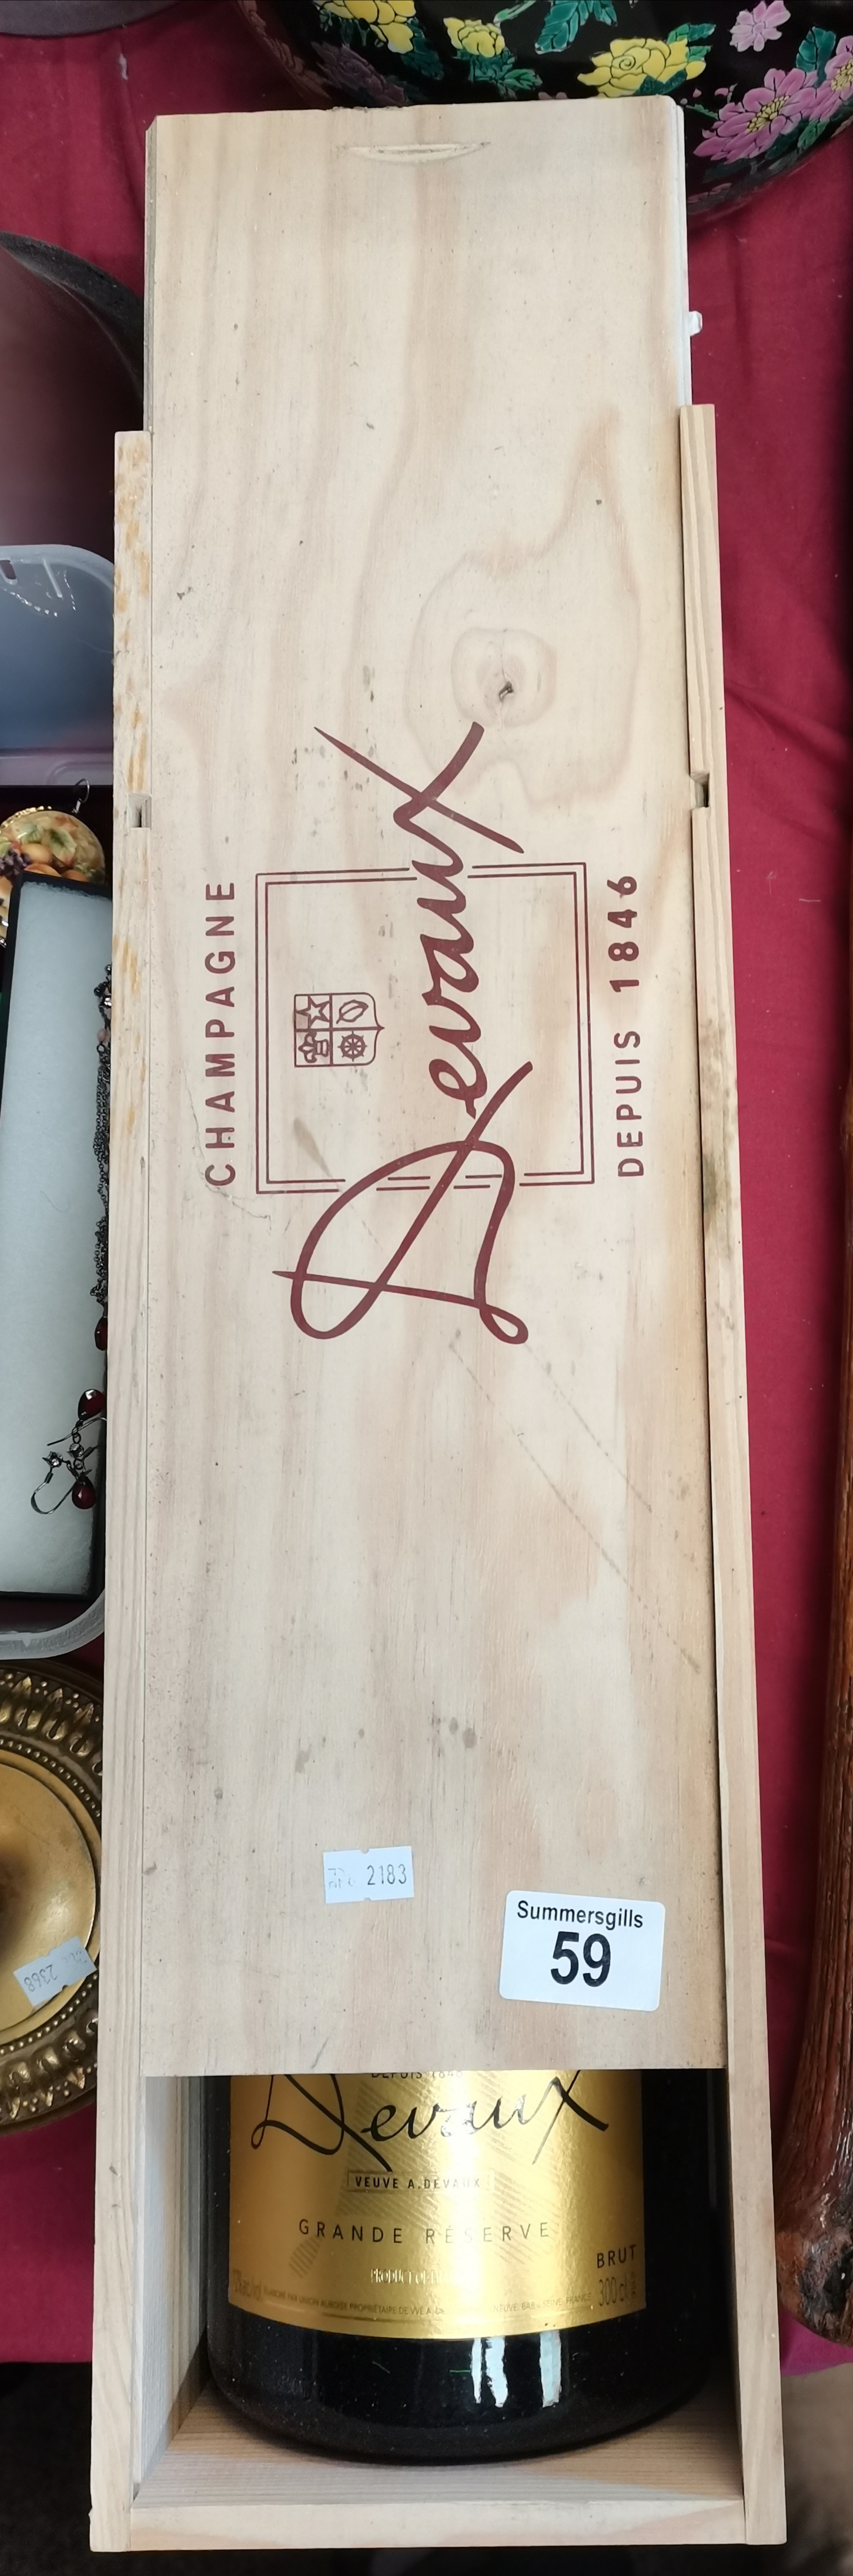 A Jeroboam of Devaux Champagne in box